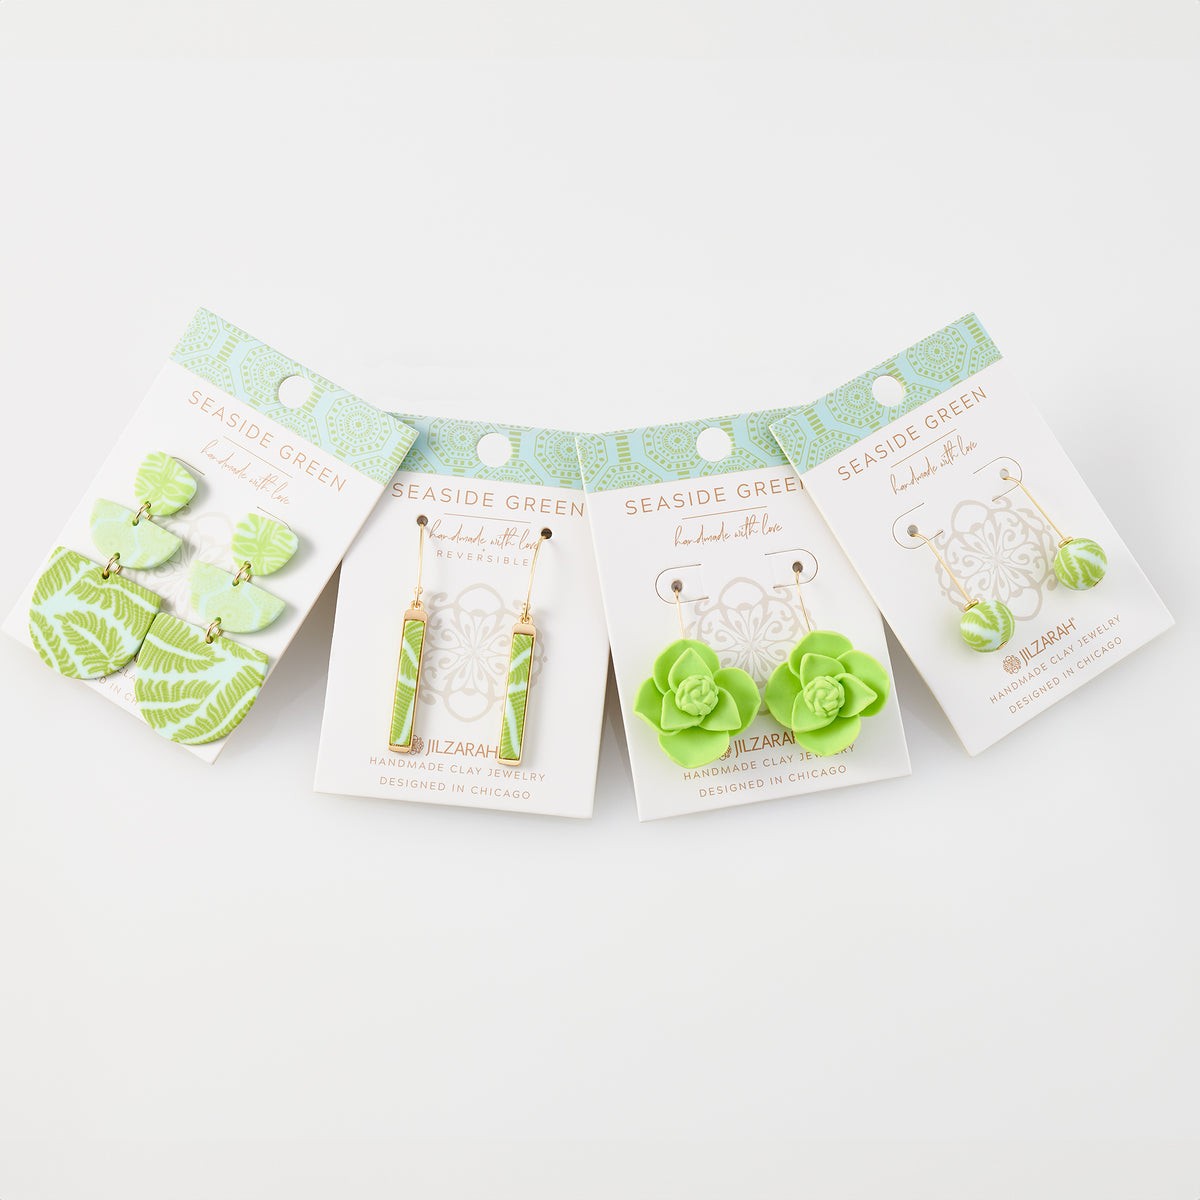 Seaside Green Earring Pack